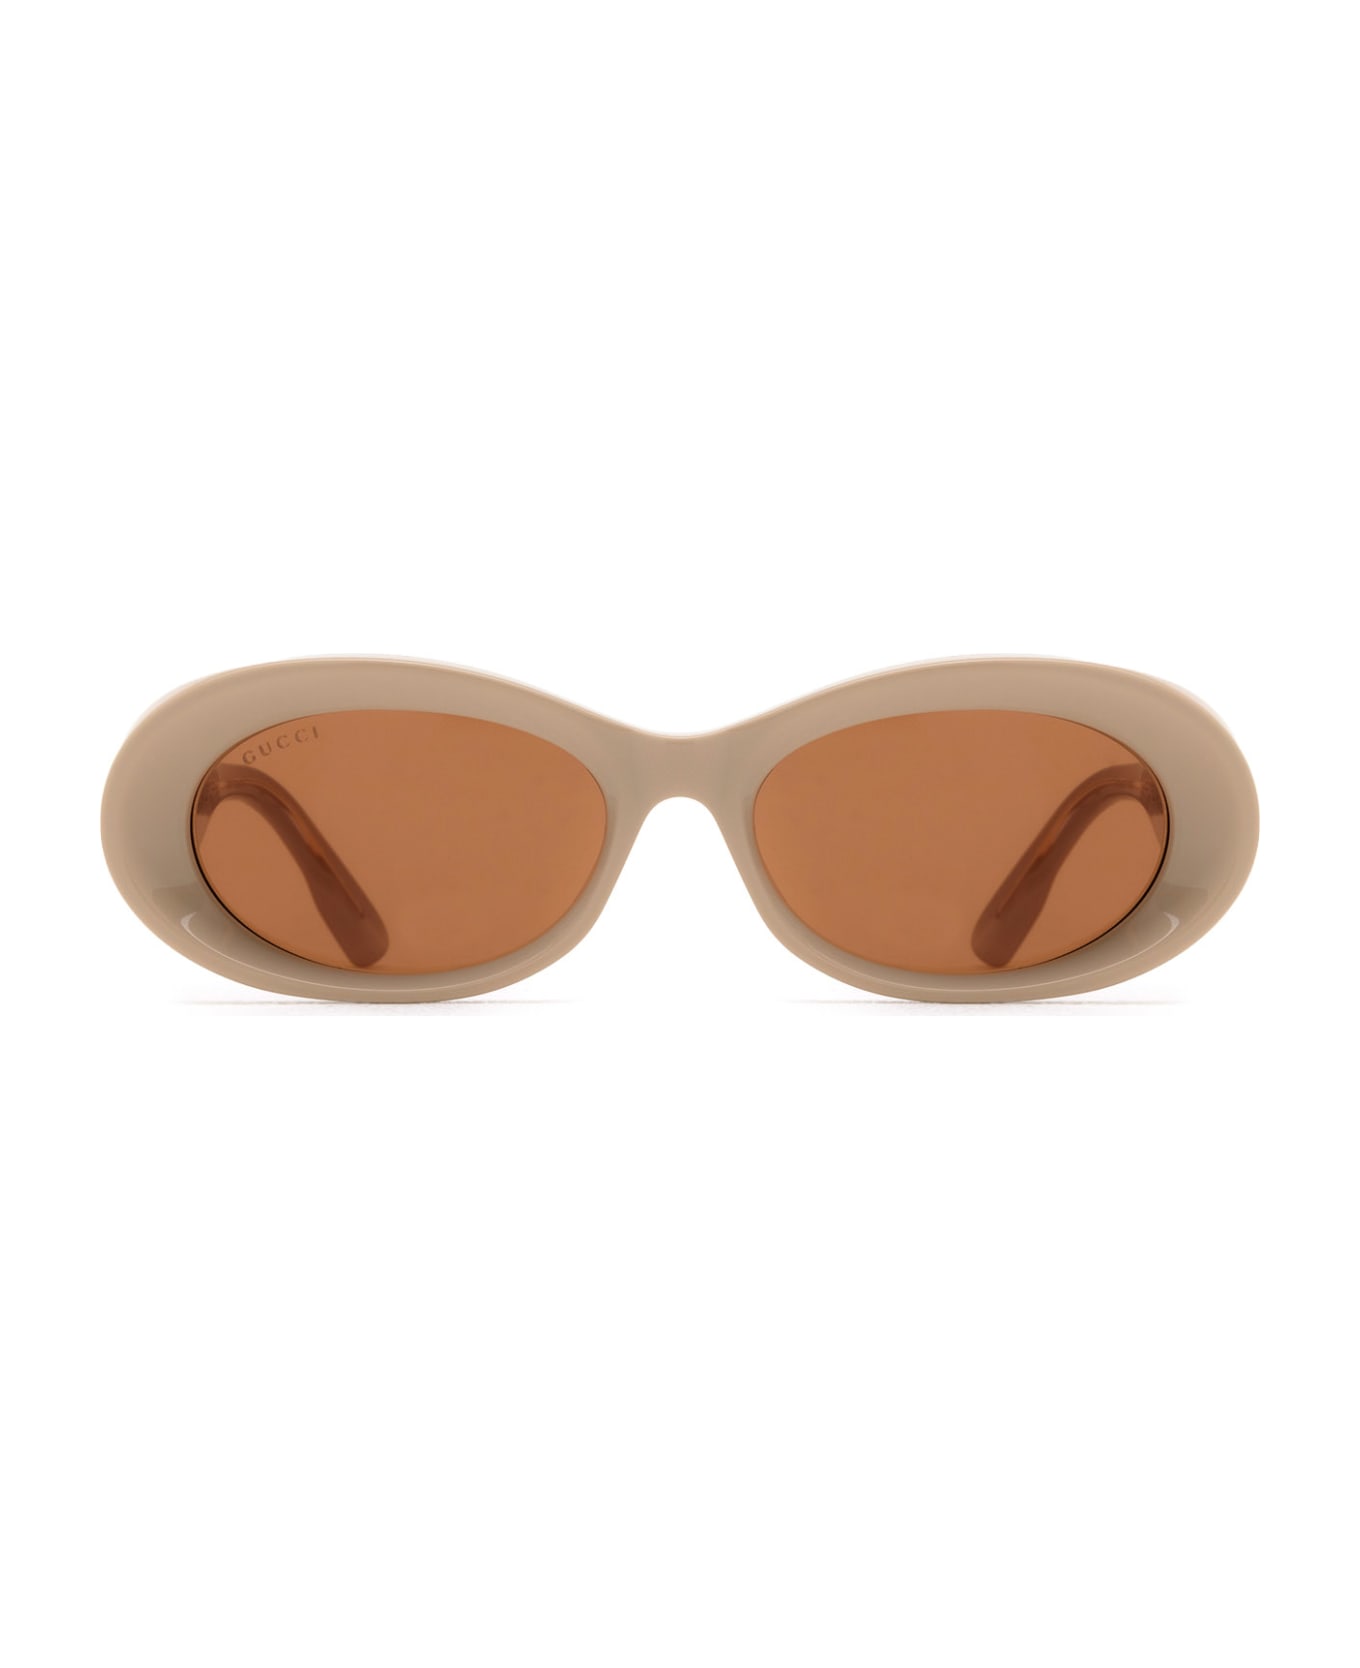 Gucci Eyewear Gg1527s Beige Sunglasses - Beige